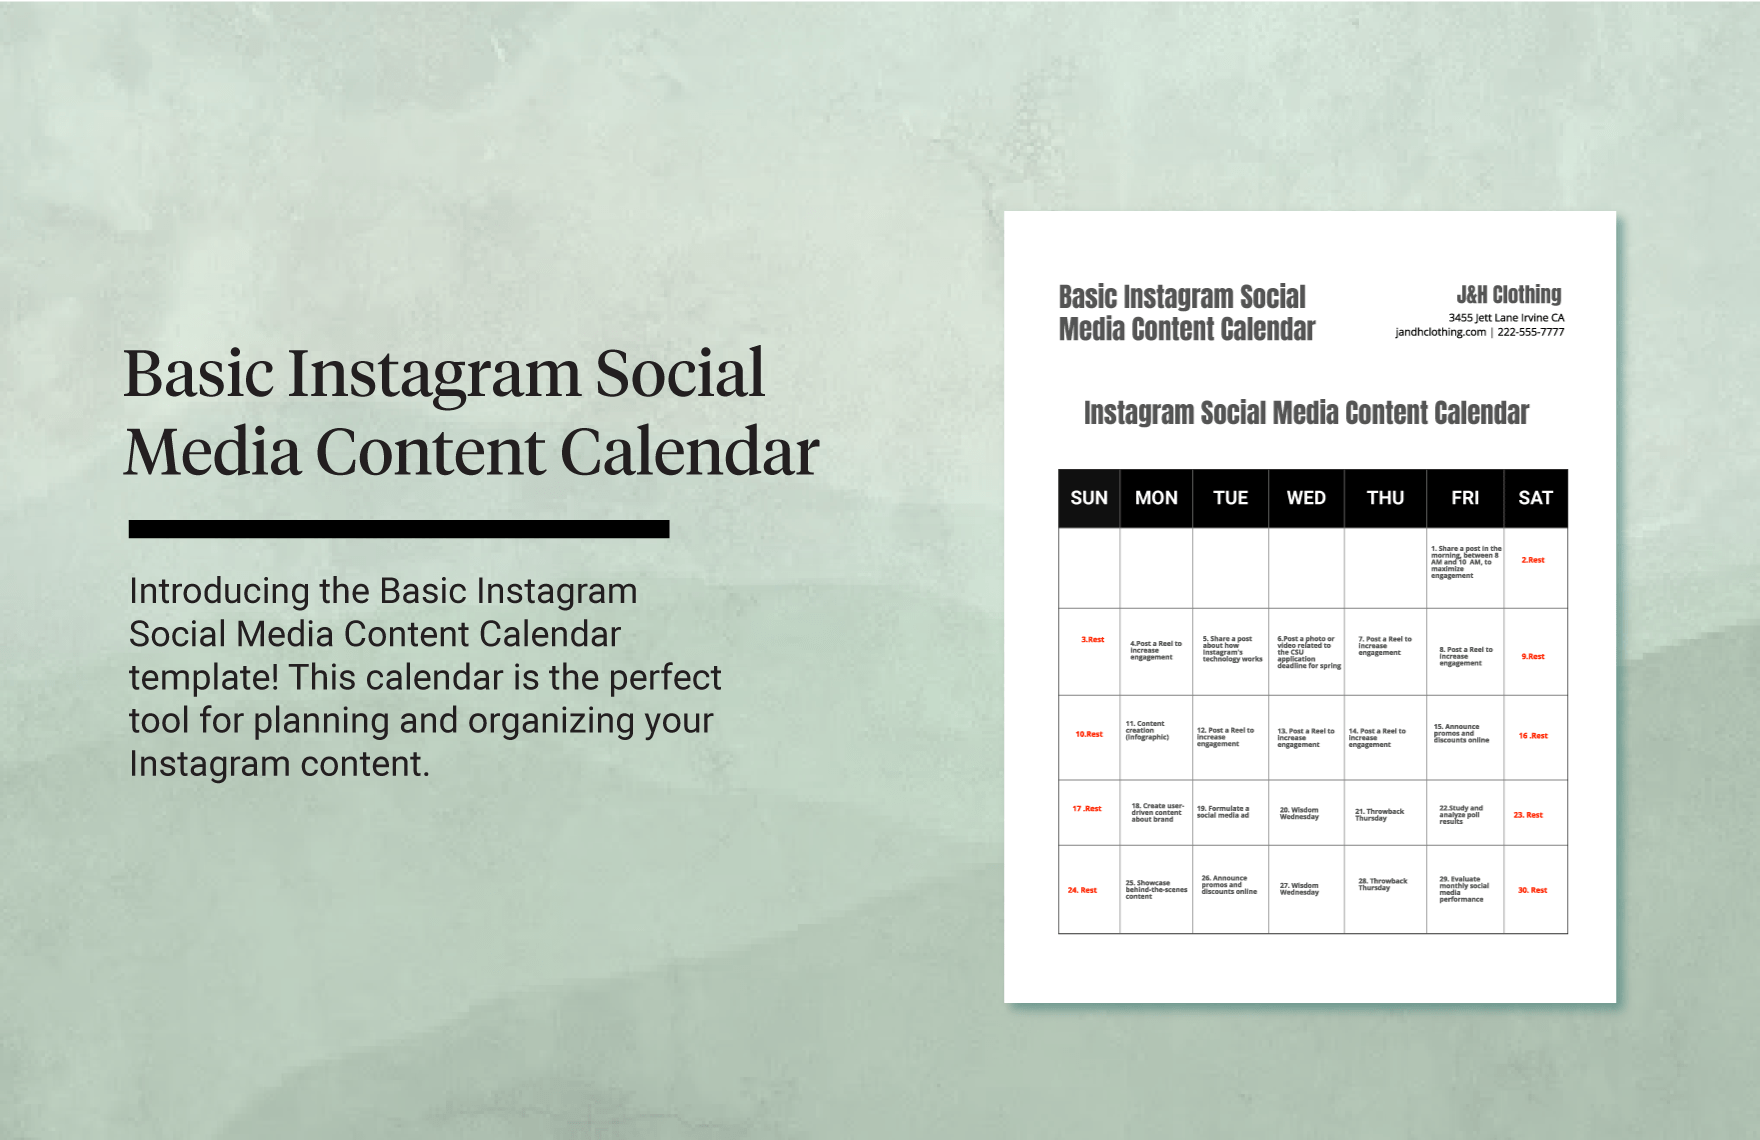  Basic Instagram Social Media Content Calendar